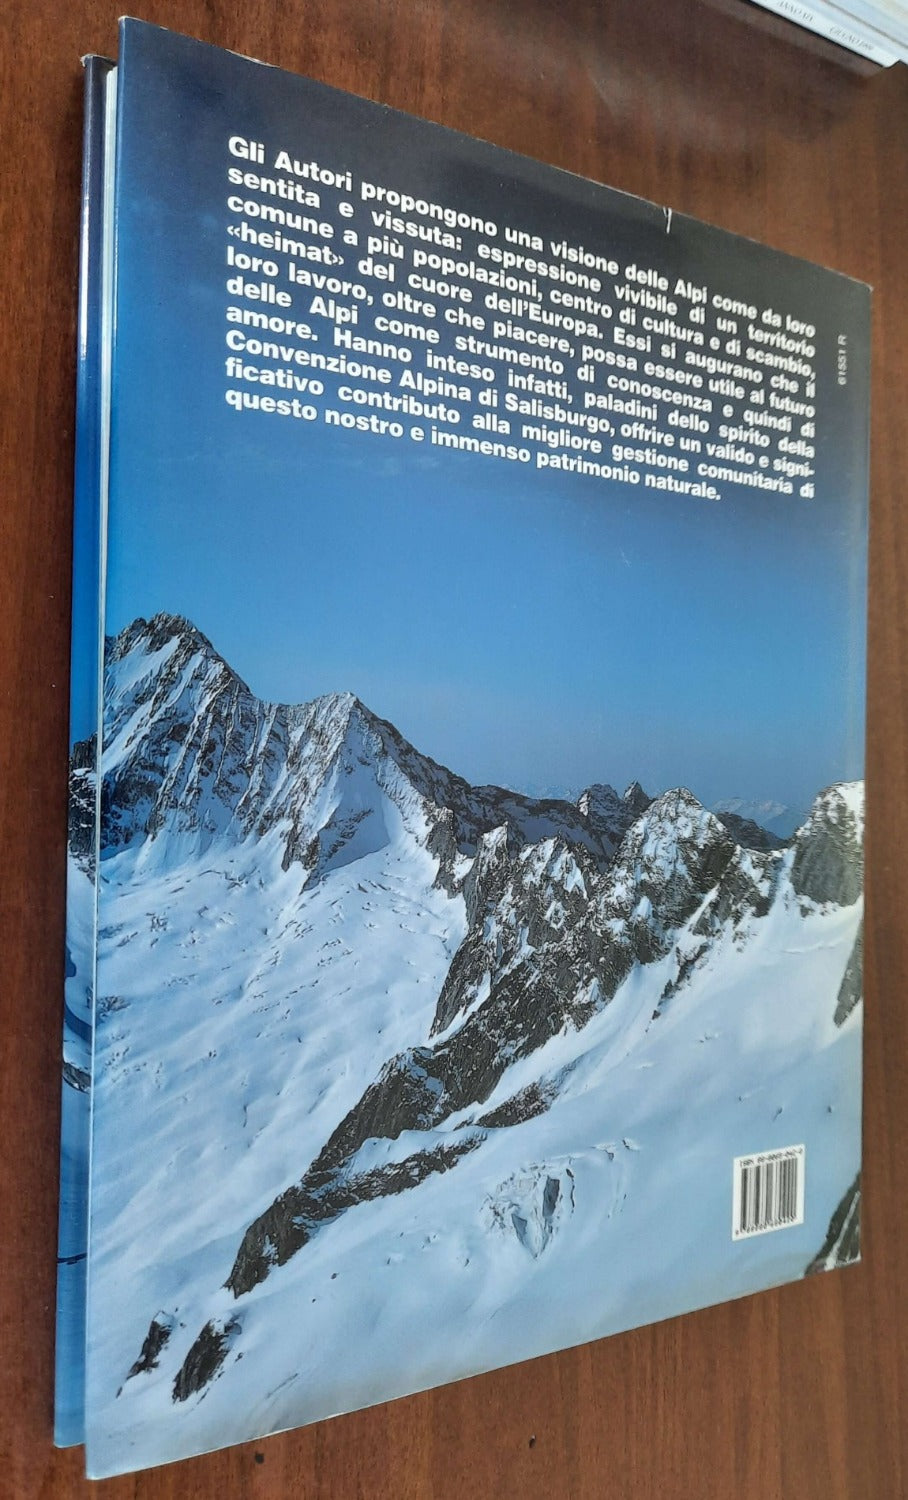 I grandi spazi delle Alpi - vol. 4. Bernina - Masino - Oberland - Grigioni